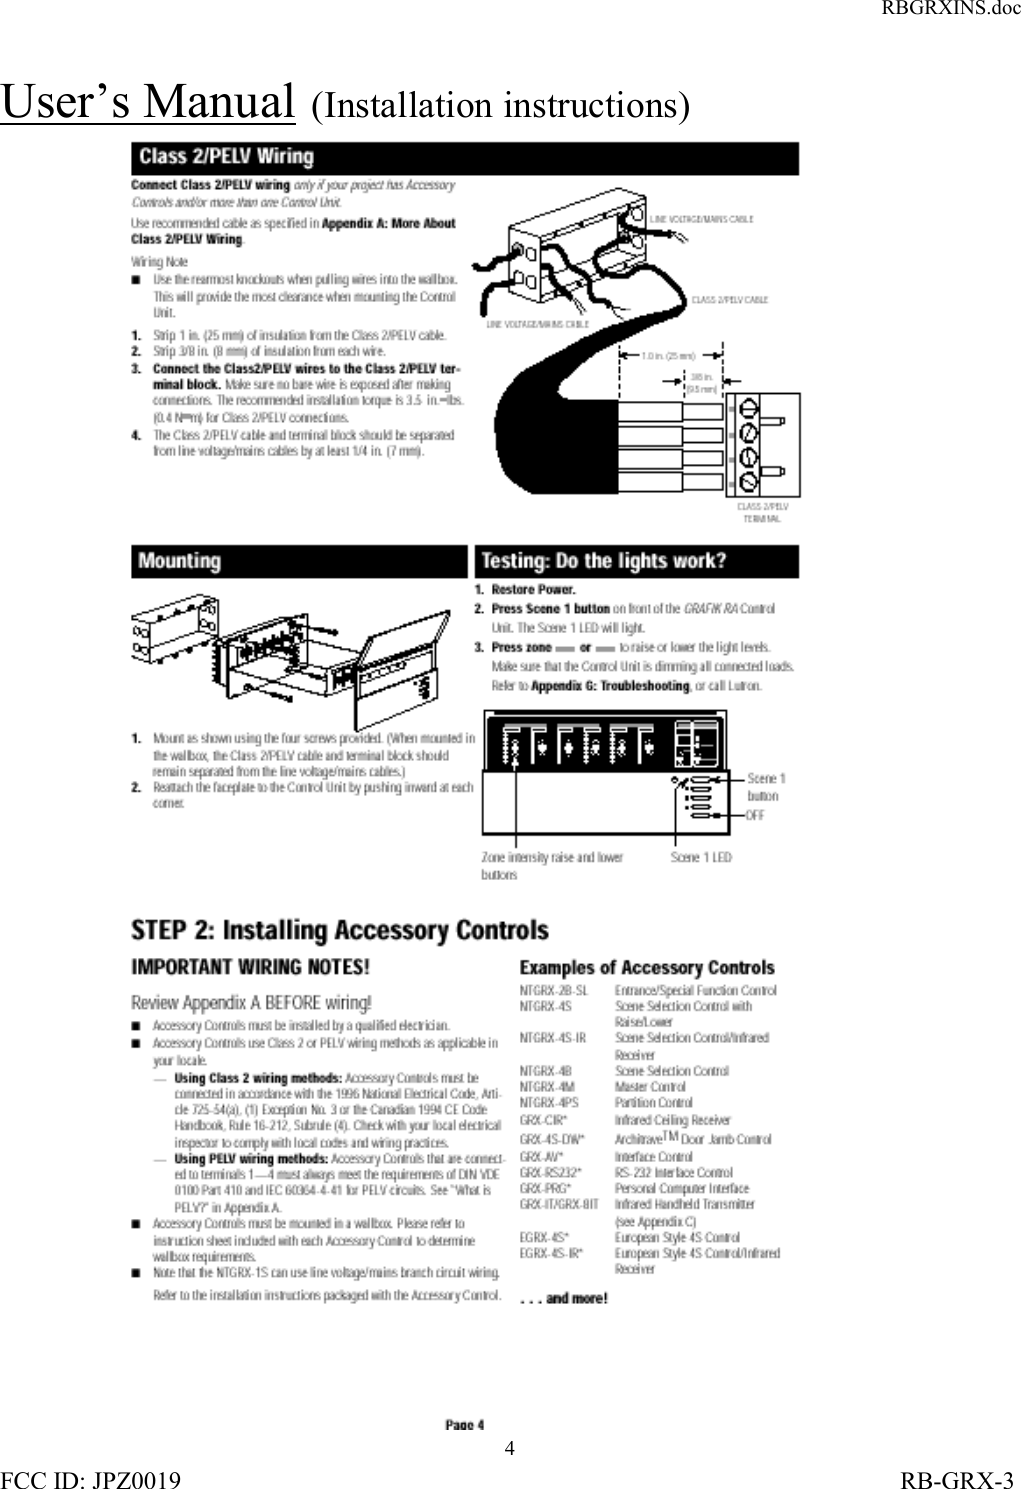 RBGRXINS.docFCC ID: JPZ0019                                                                                                                   RB-GRX-34User’s Manual  (Installation instructions)